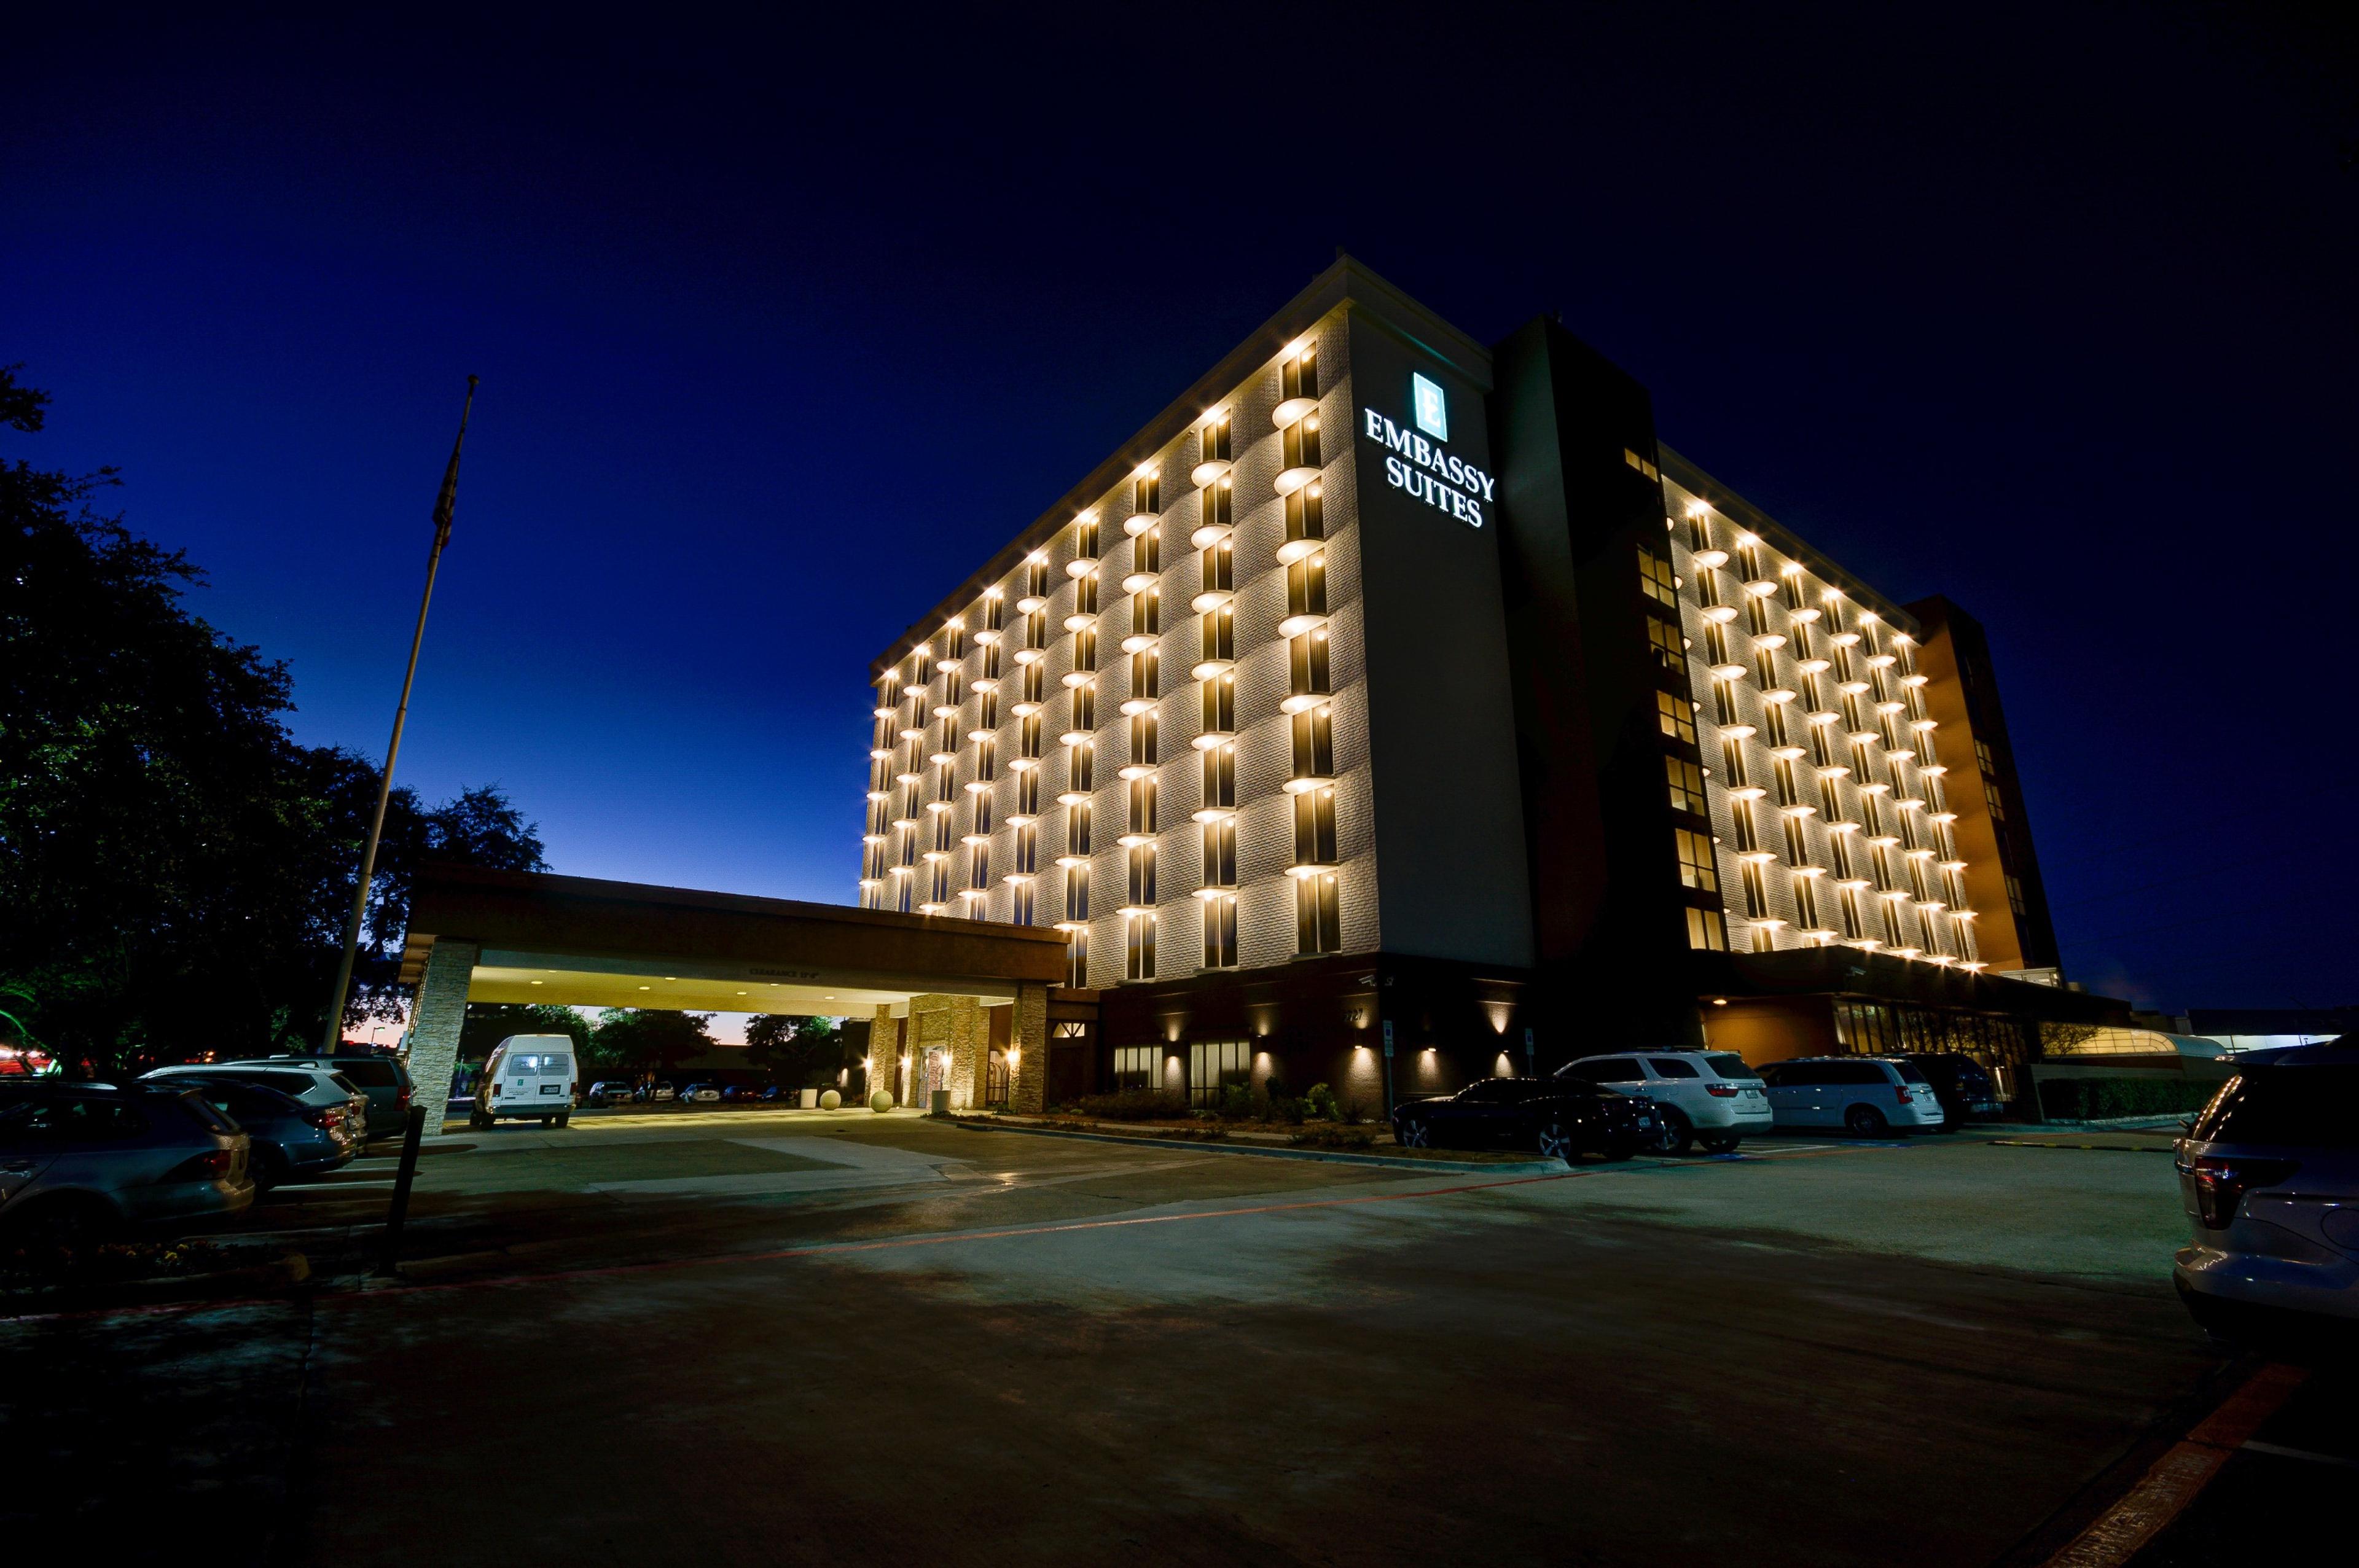 Embassy Suites by Hilton Dallas Market Center